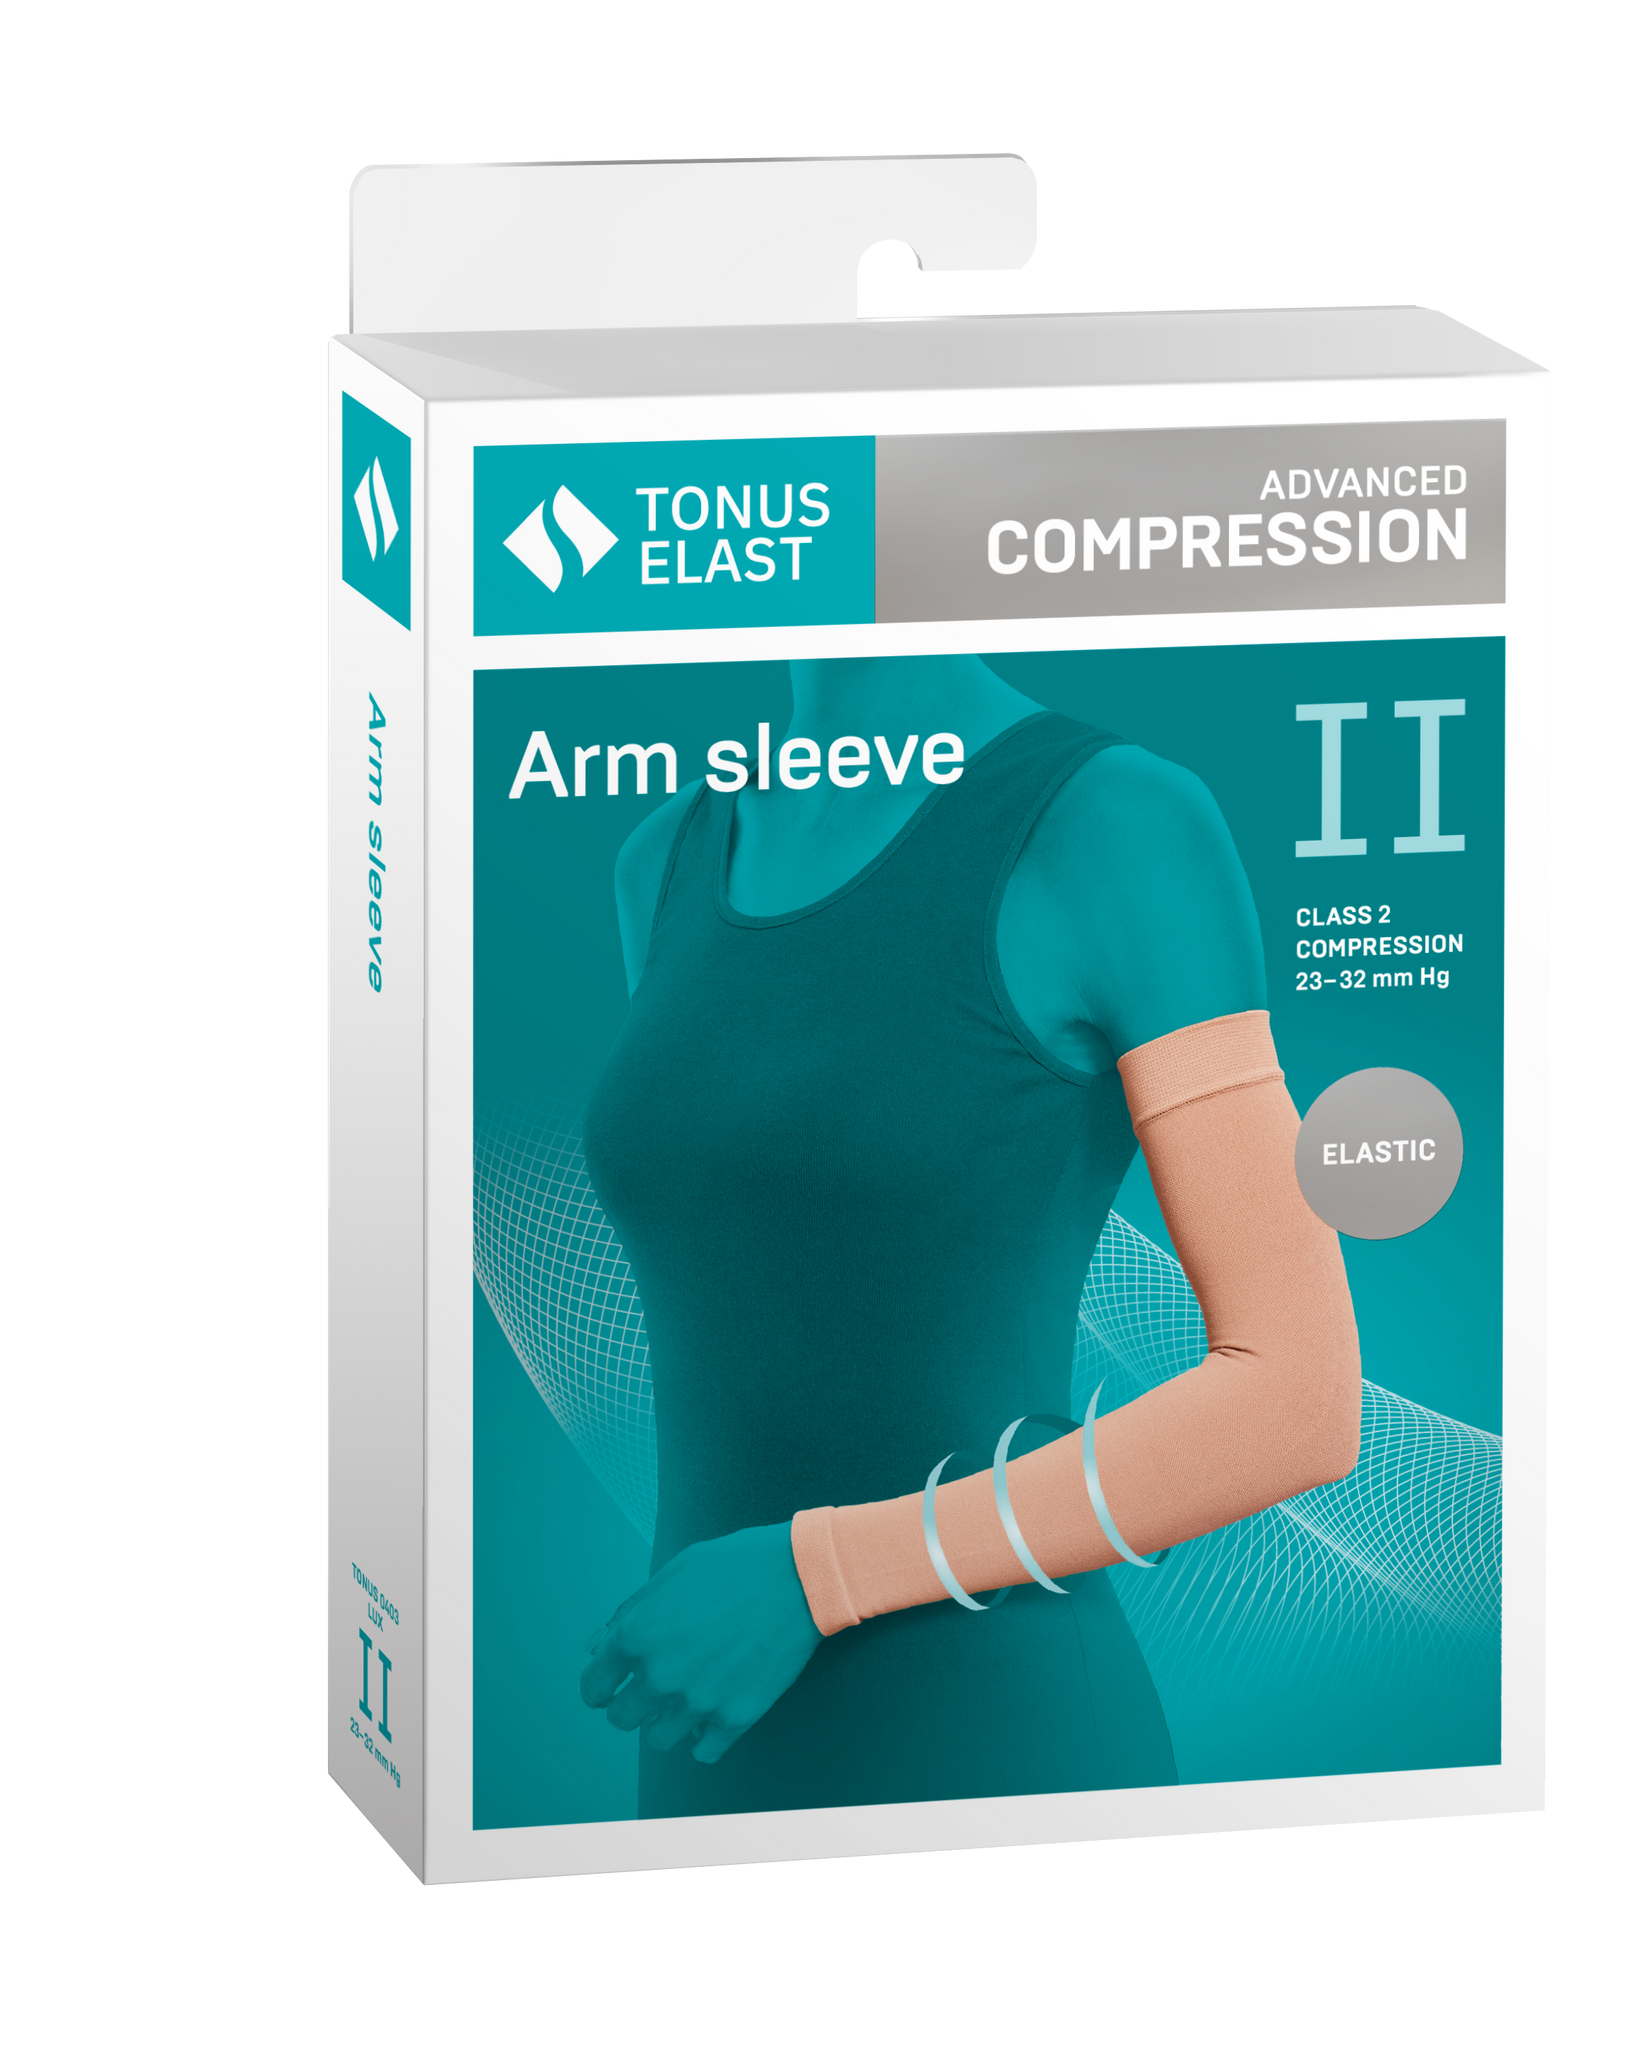 CzSalus Compression Massaging arms Sleeves, Lipedema, Lymphedema